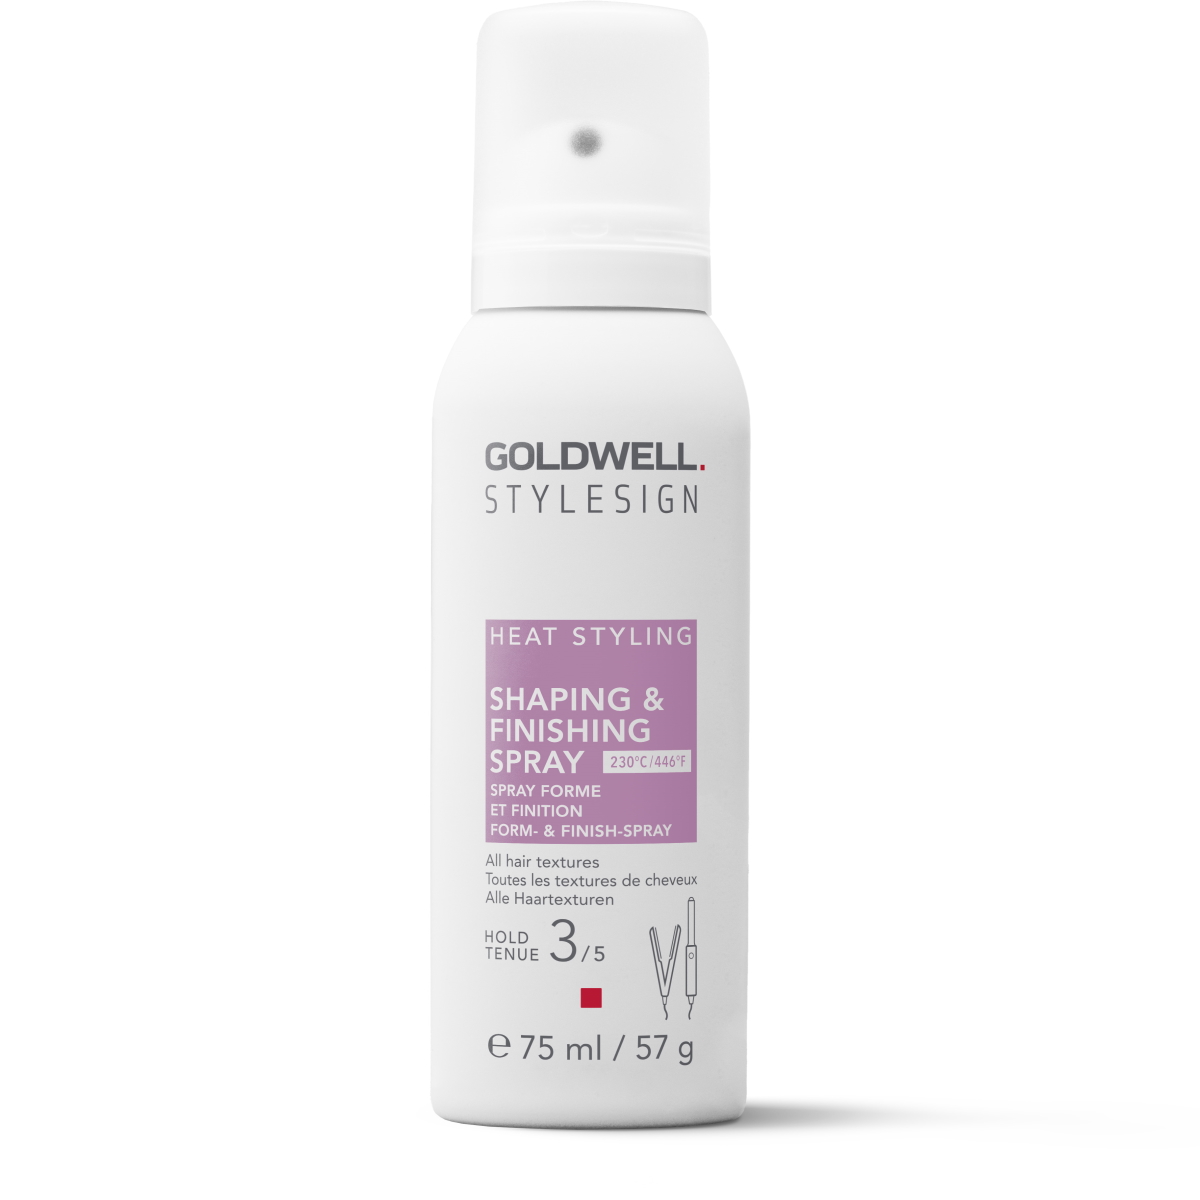 Goldwell Style Sign Heat Styling Shaping & Finishing Spray 75ml